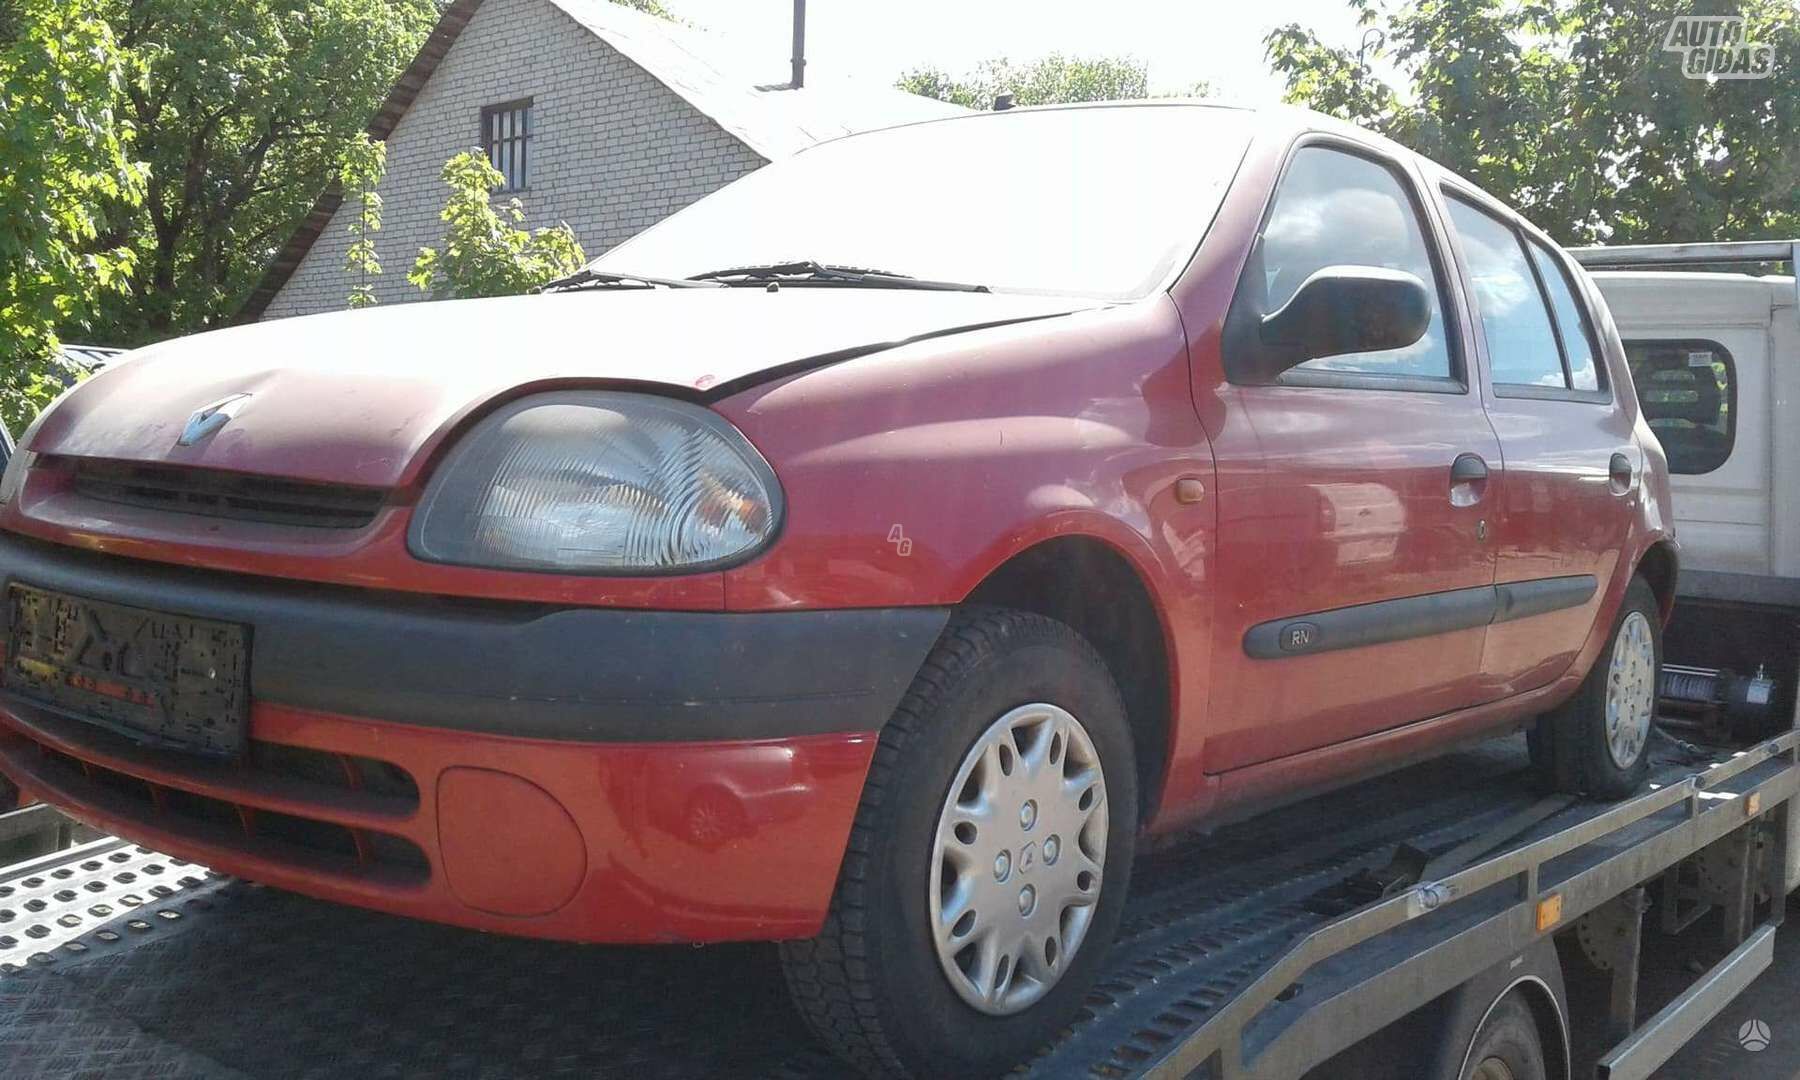 Renault Clio 1998 г запчясти